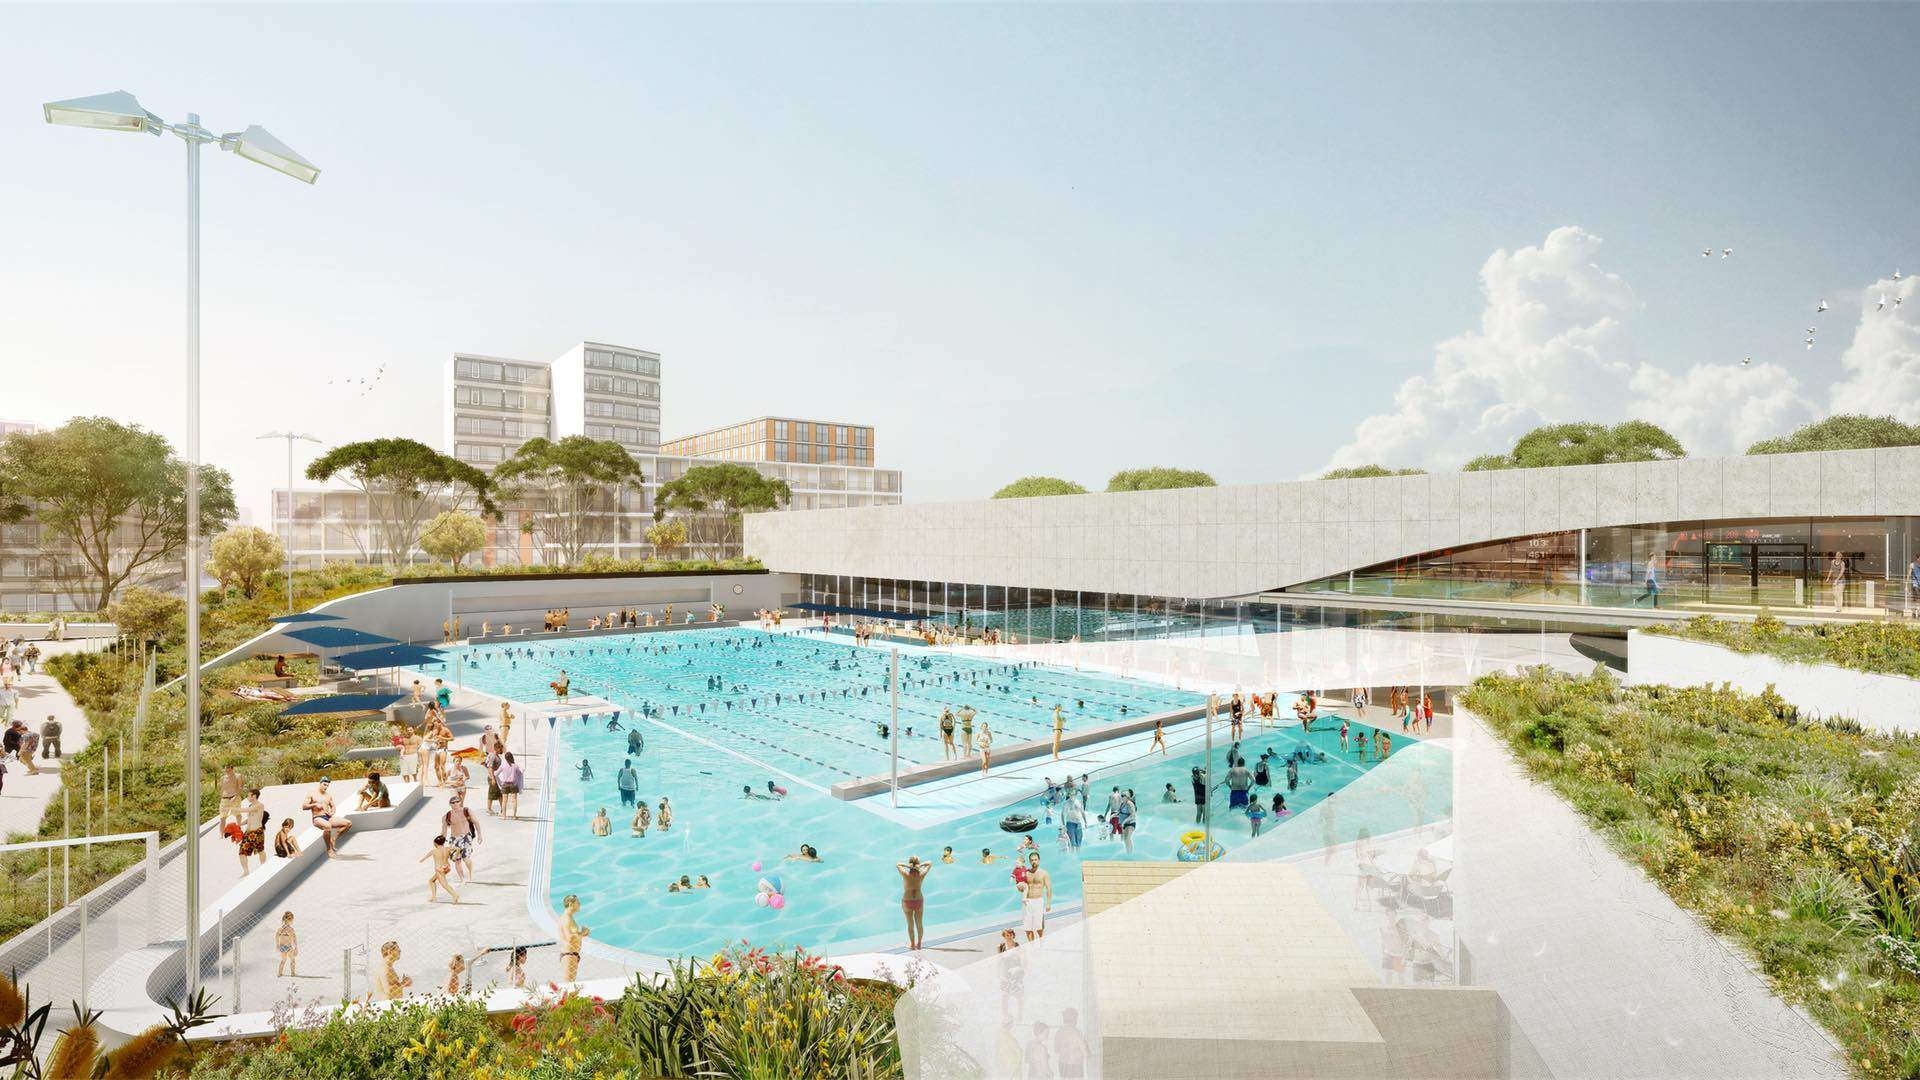 Work on Sydney's Huge New Gunyama Park Aquatic Centre Kicks Off Next Month